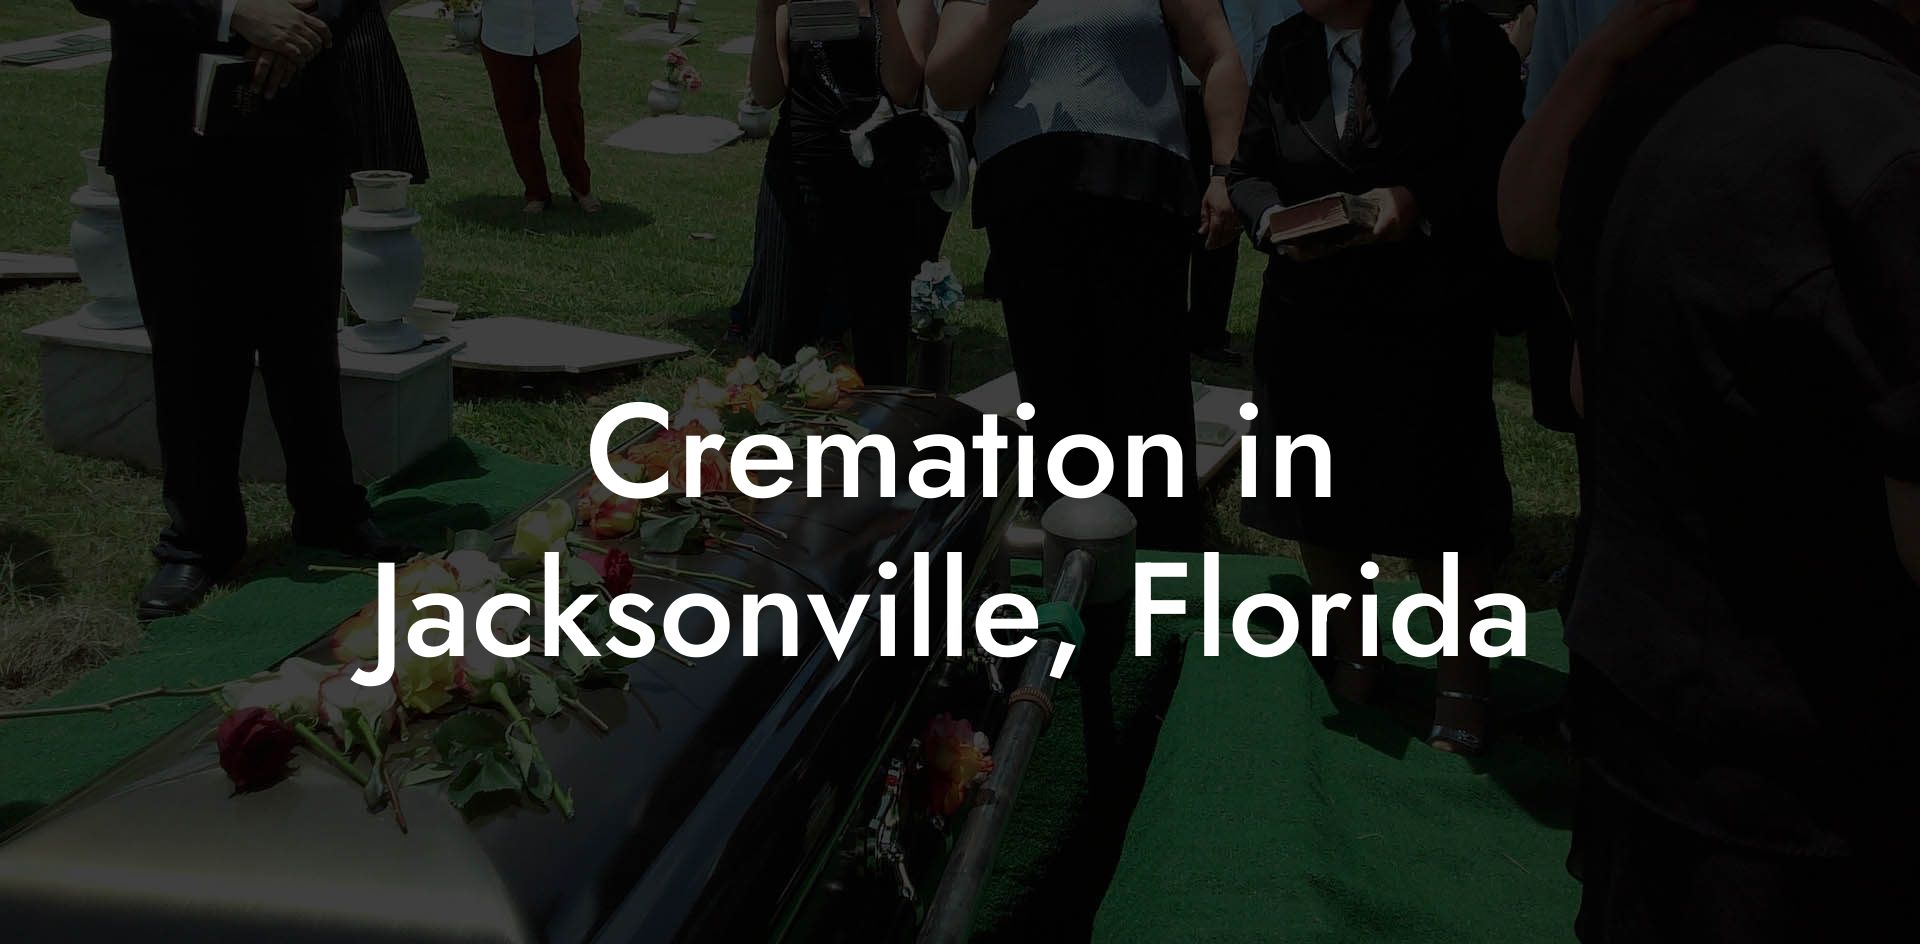 Cremation in Jacksonville, Florida